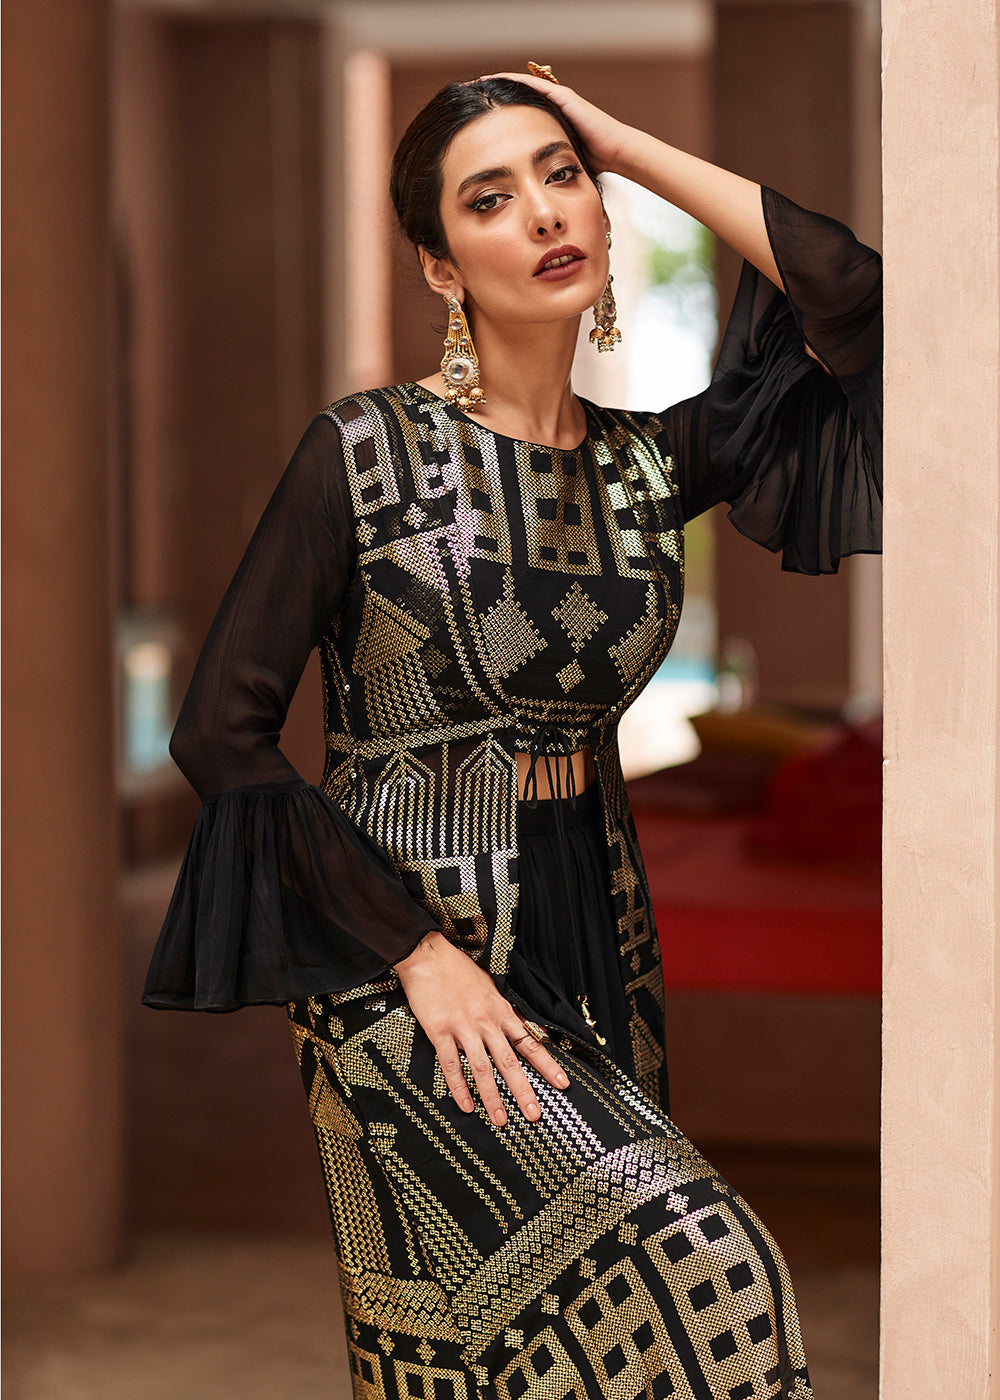 Shop Now Marvelous Black Party Wear Lehenga Choli with Jacket Online in USA, UK, Canada & Worldwide at Empress Clothing.